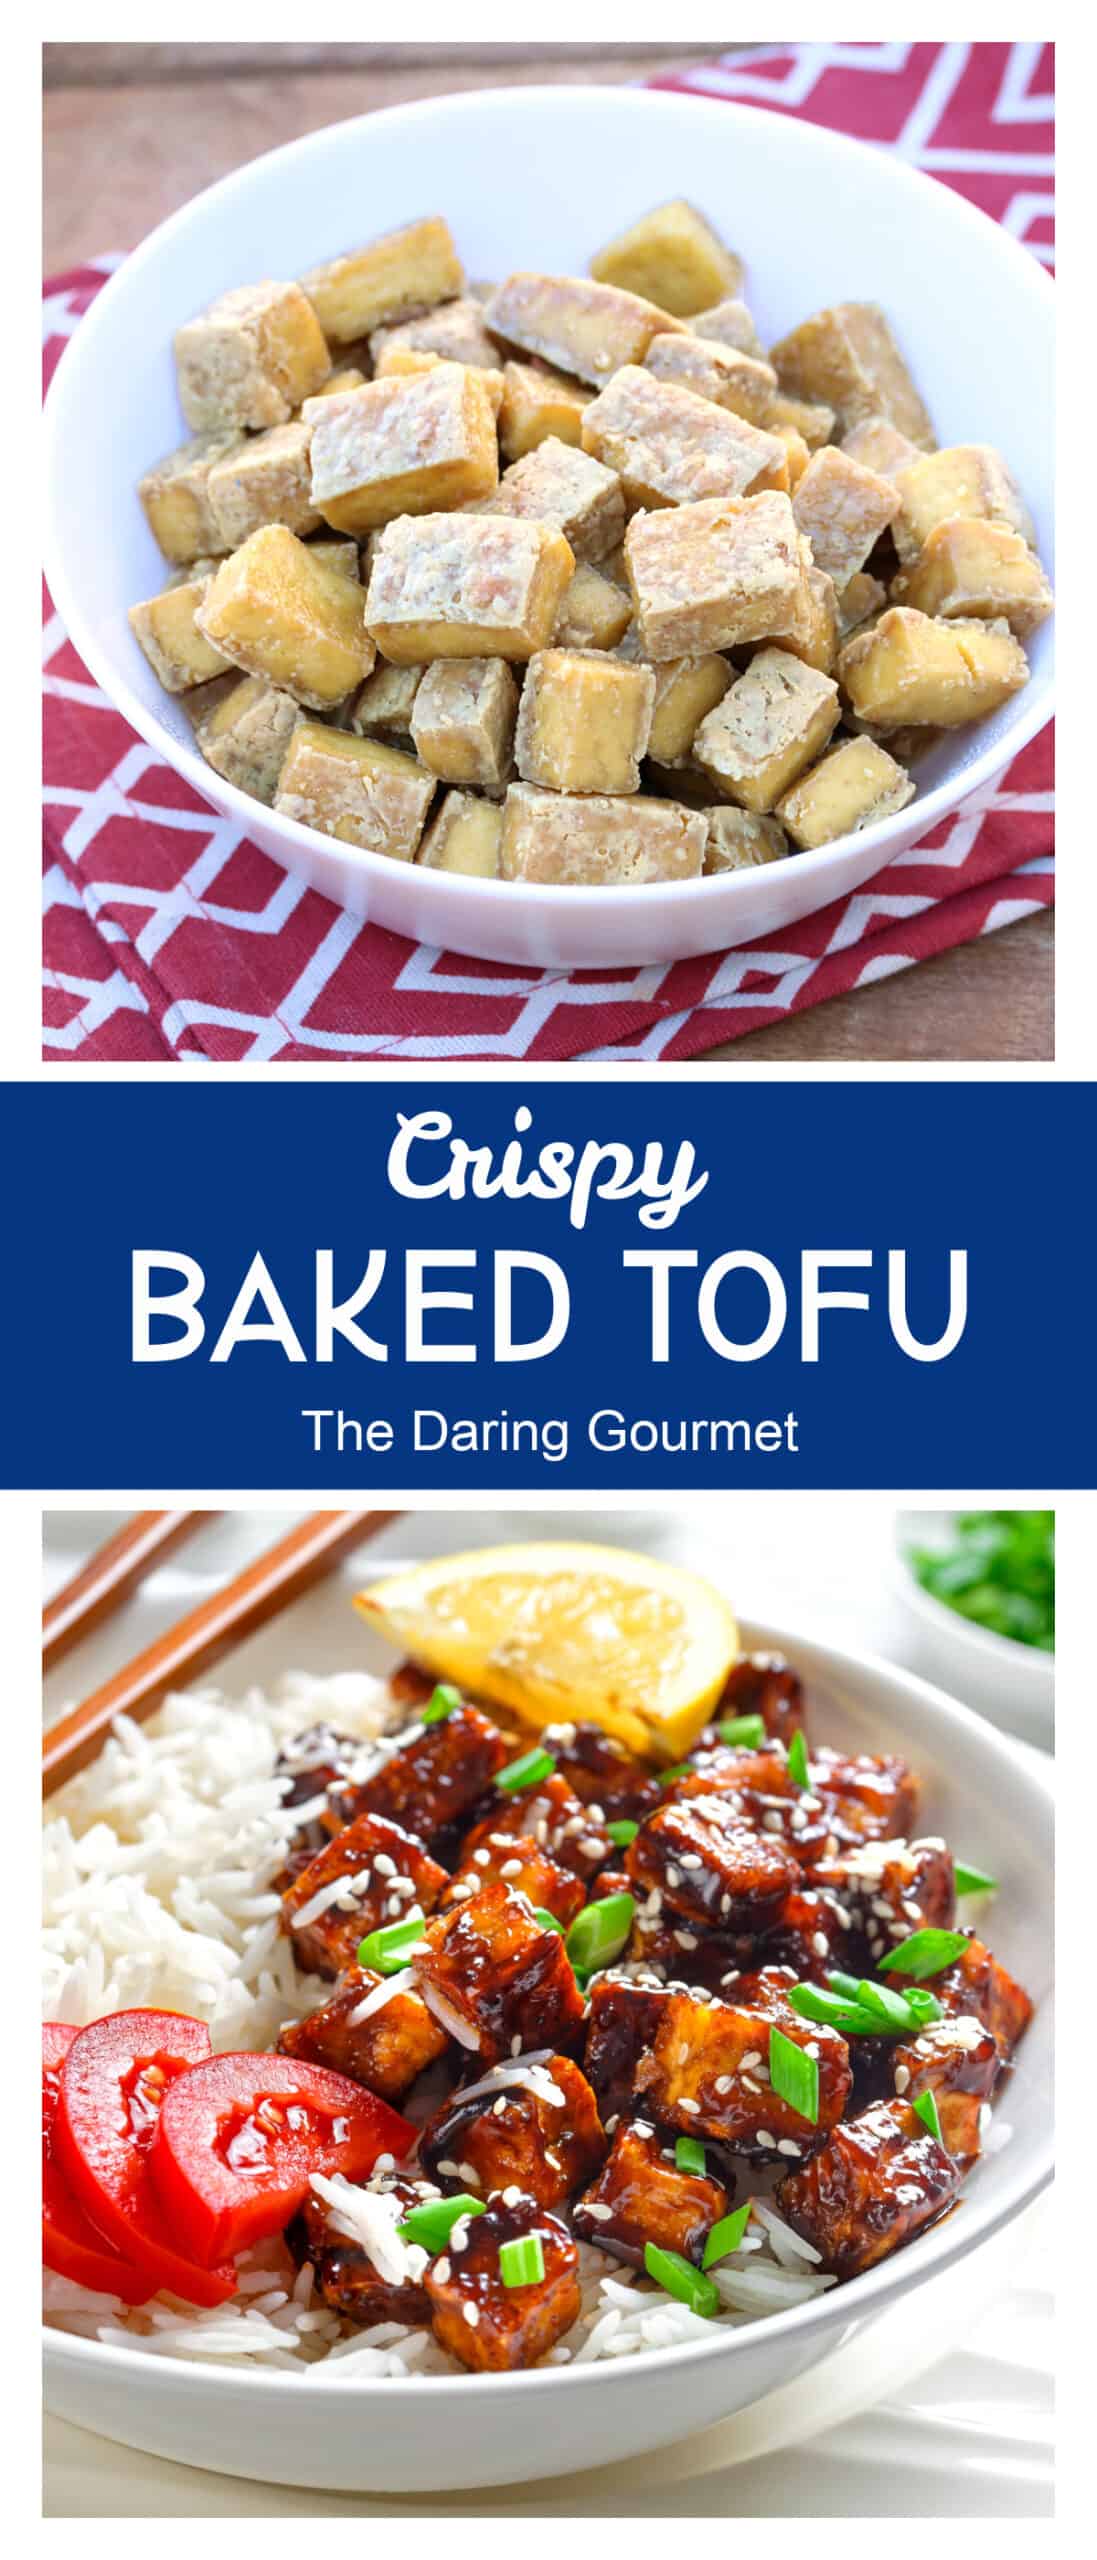 baked tofu recipe oven healthy crispy meat substitute gluten free vegetarian vegan dairy free